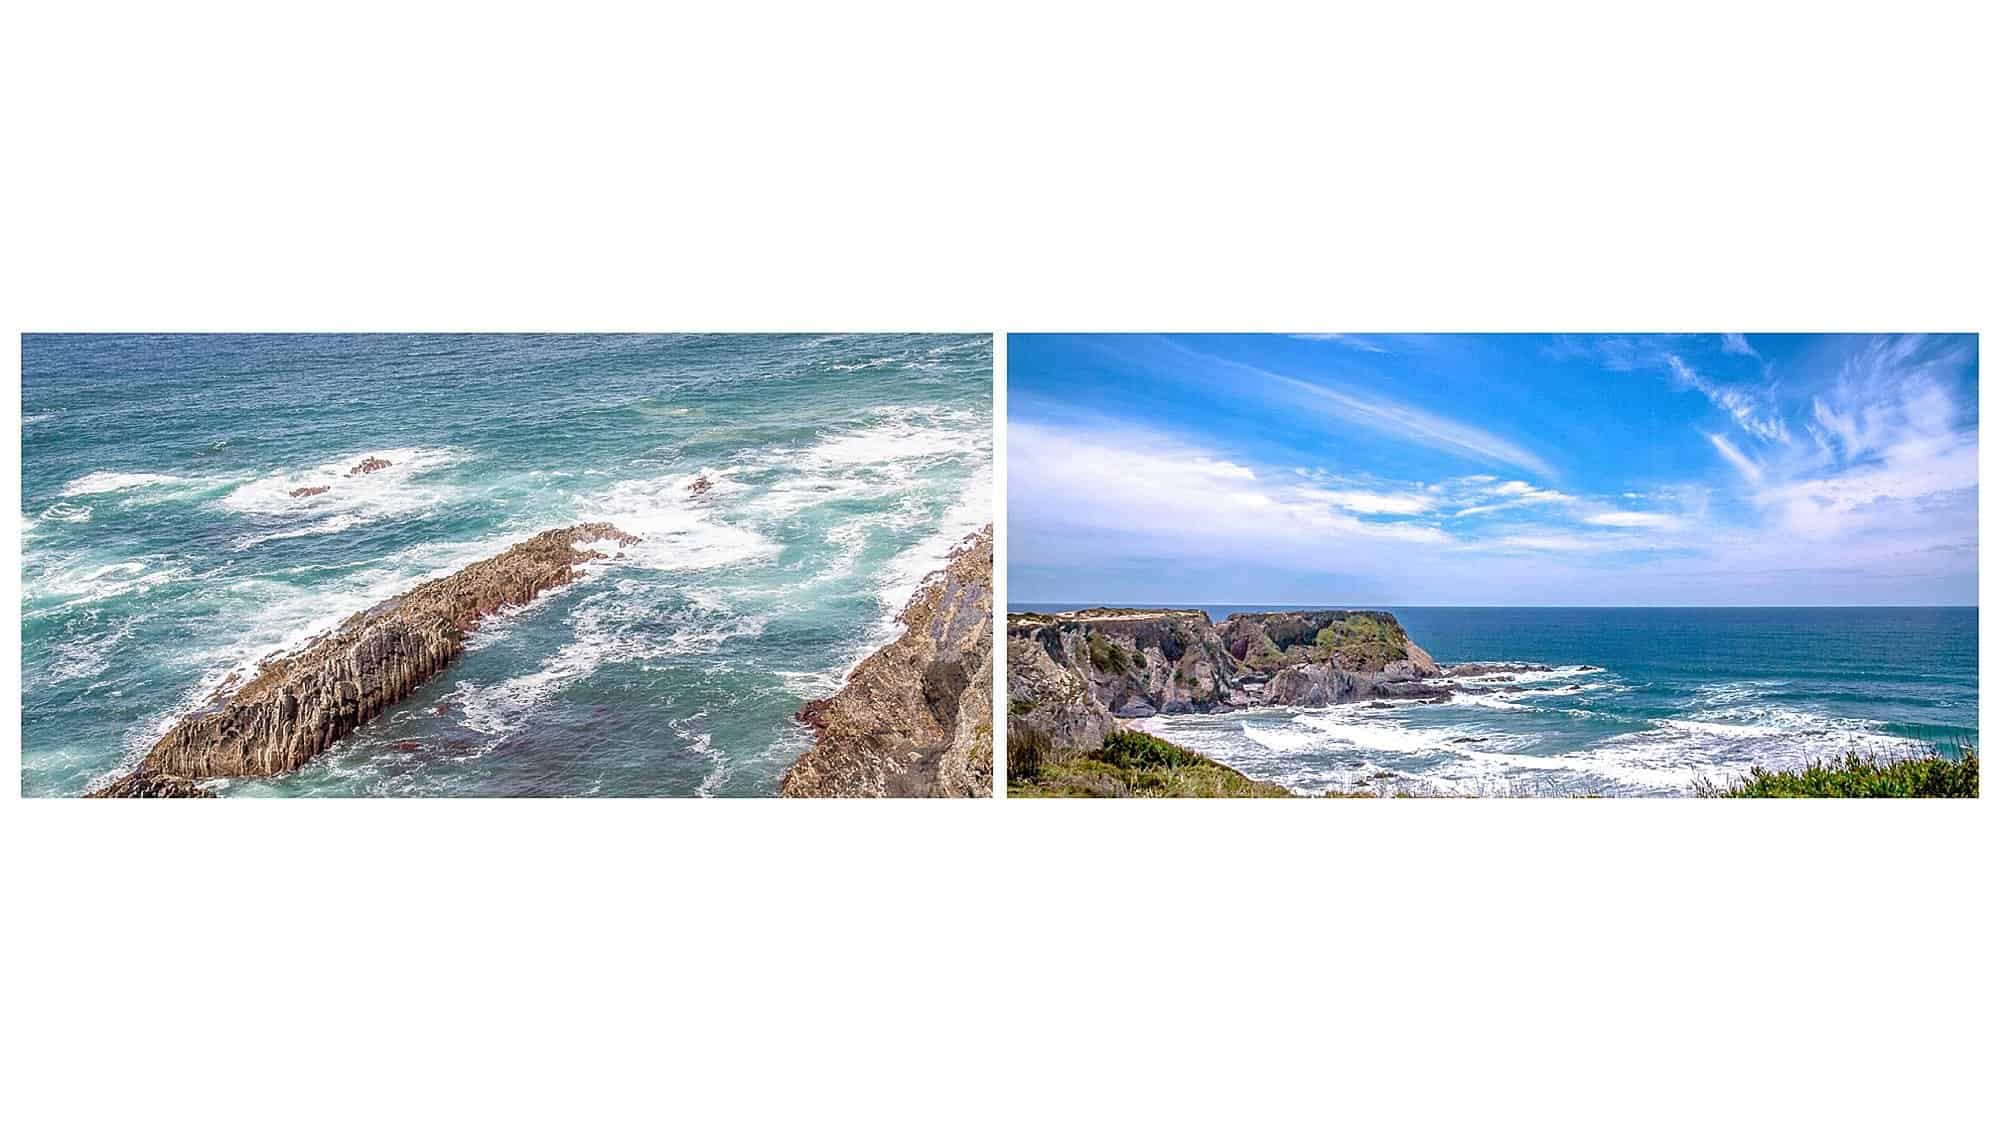 Wild waves on coast of Portugal Alentejo Costa Vicentina